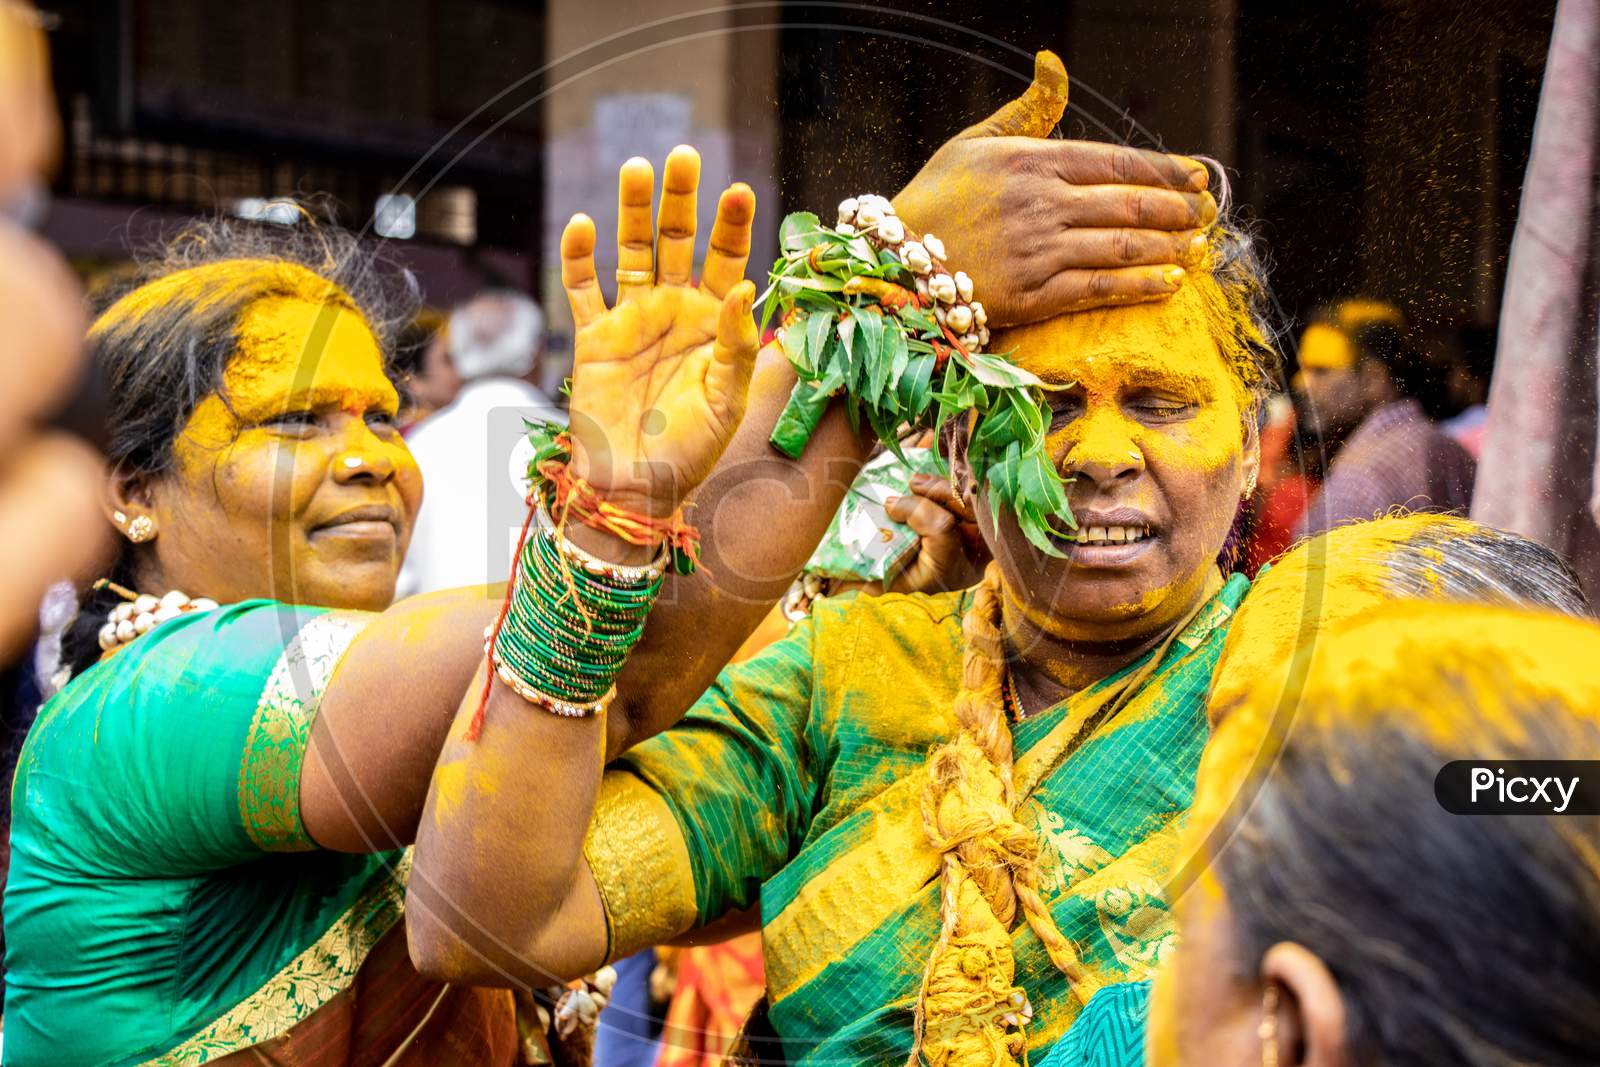 Indian Hindu Devotee In Trance During Bonalu Festival At Renuka Yellamma Temple in Hyderabad